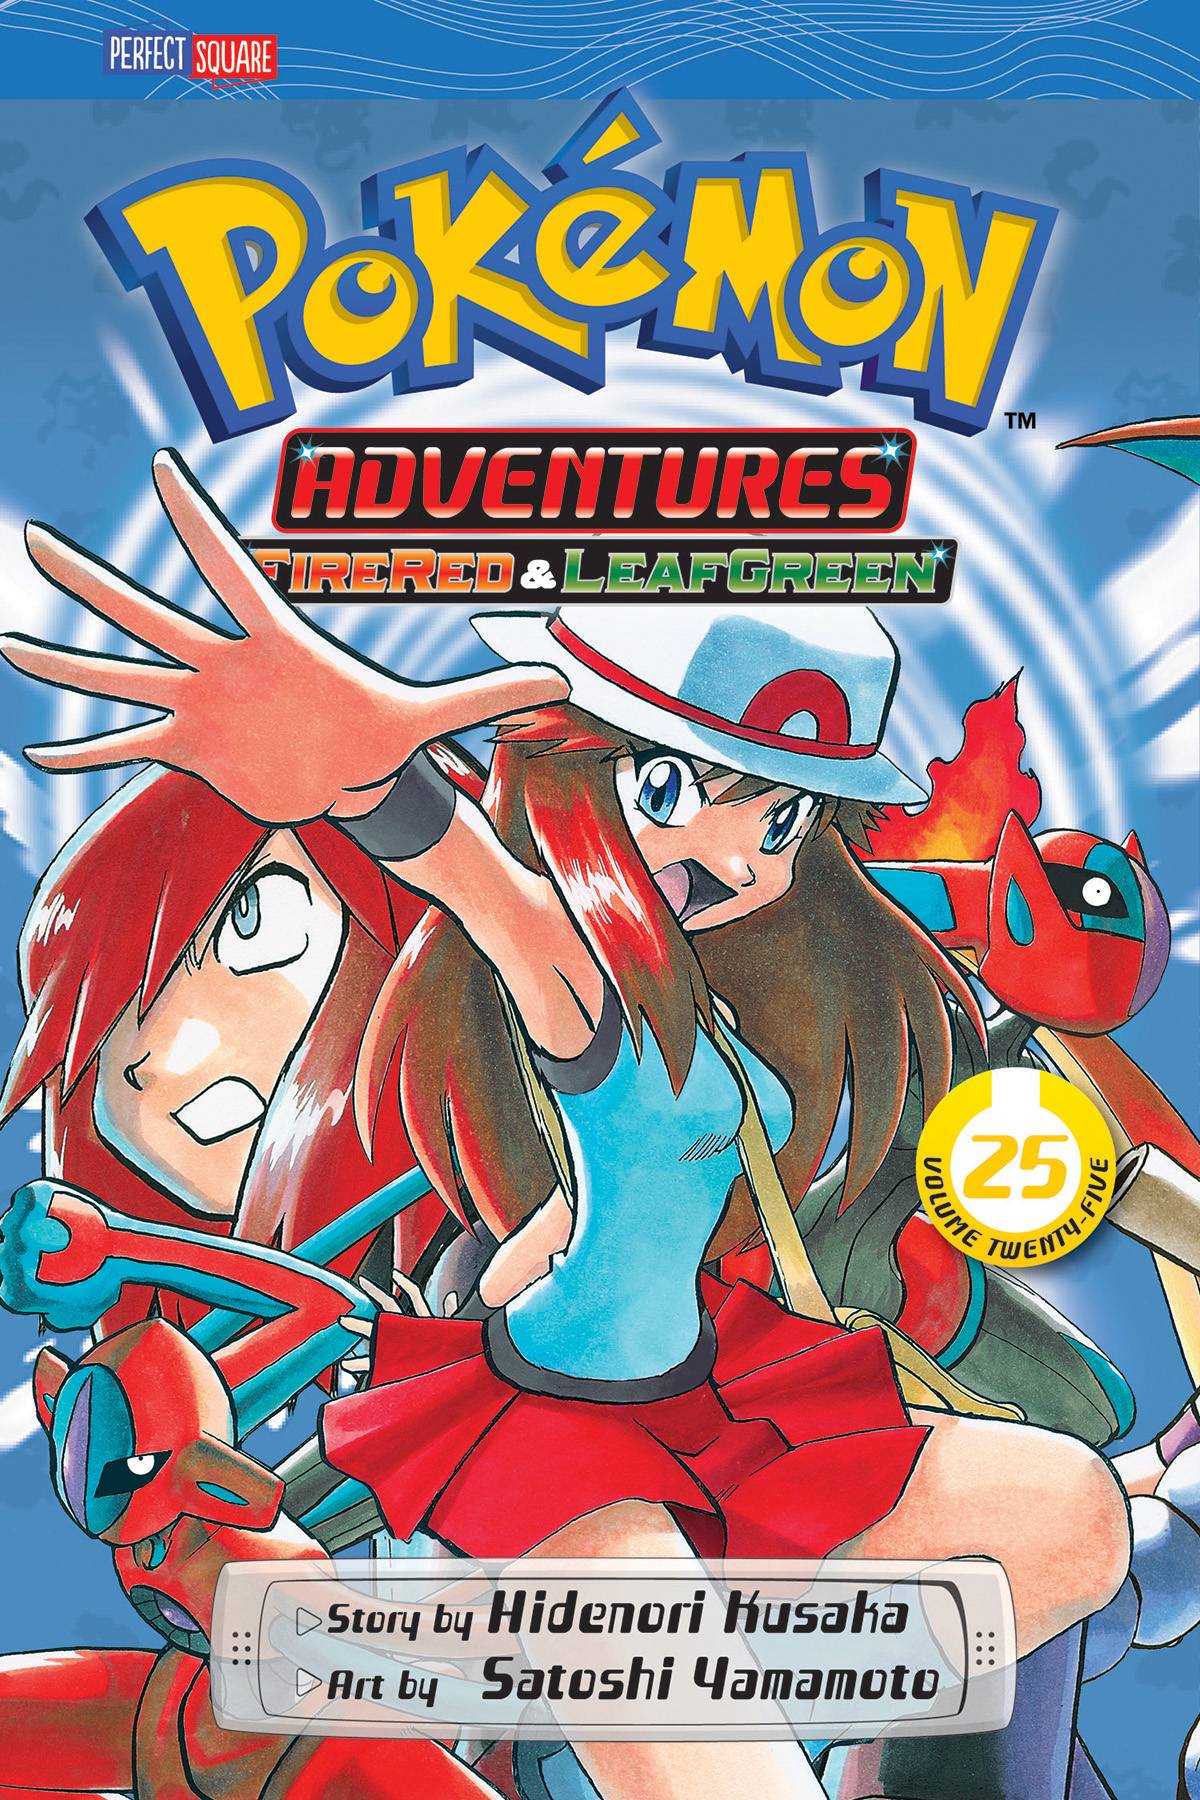 Pokémon Adventures Manga Volume 25 Firered & Leafgreen